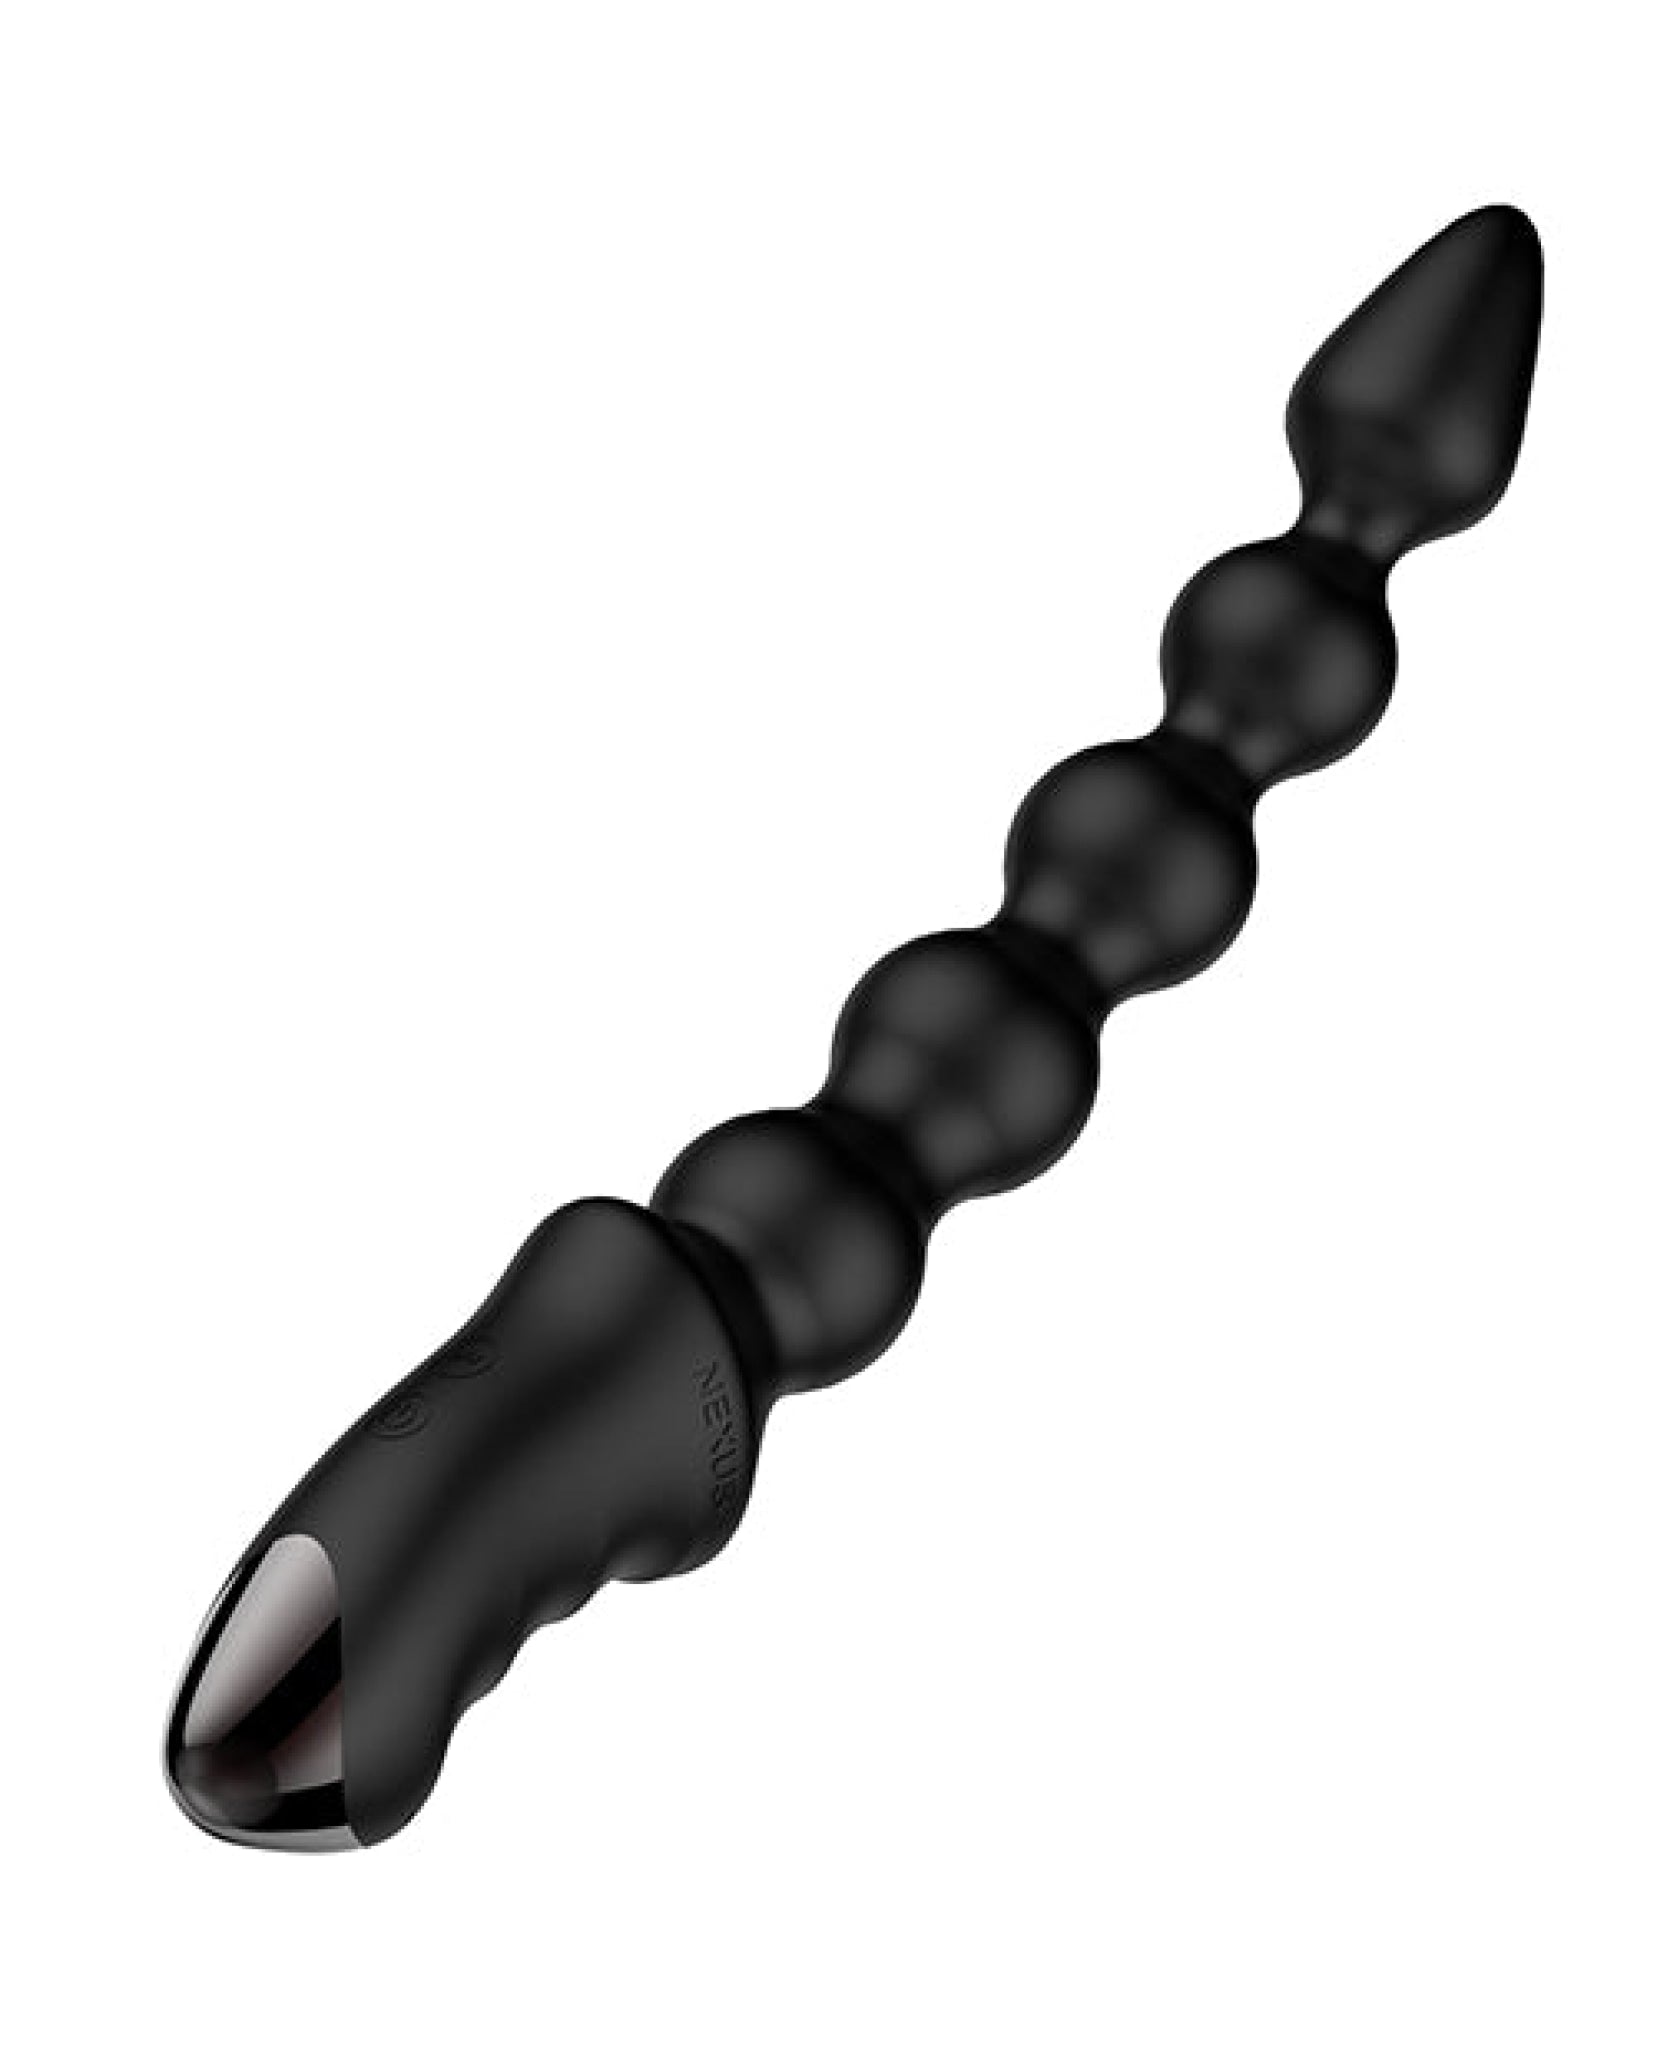 Nexus Bendz Bendable Vibrating Probe - Black Nexus